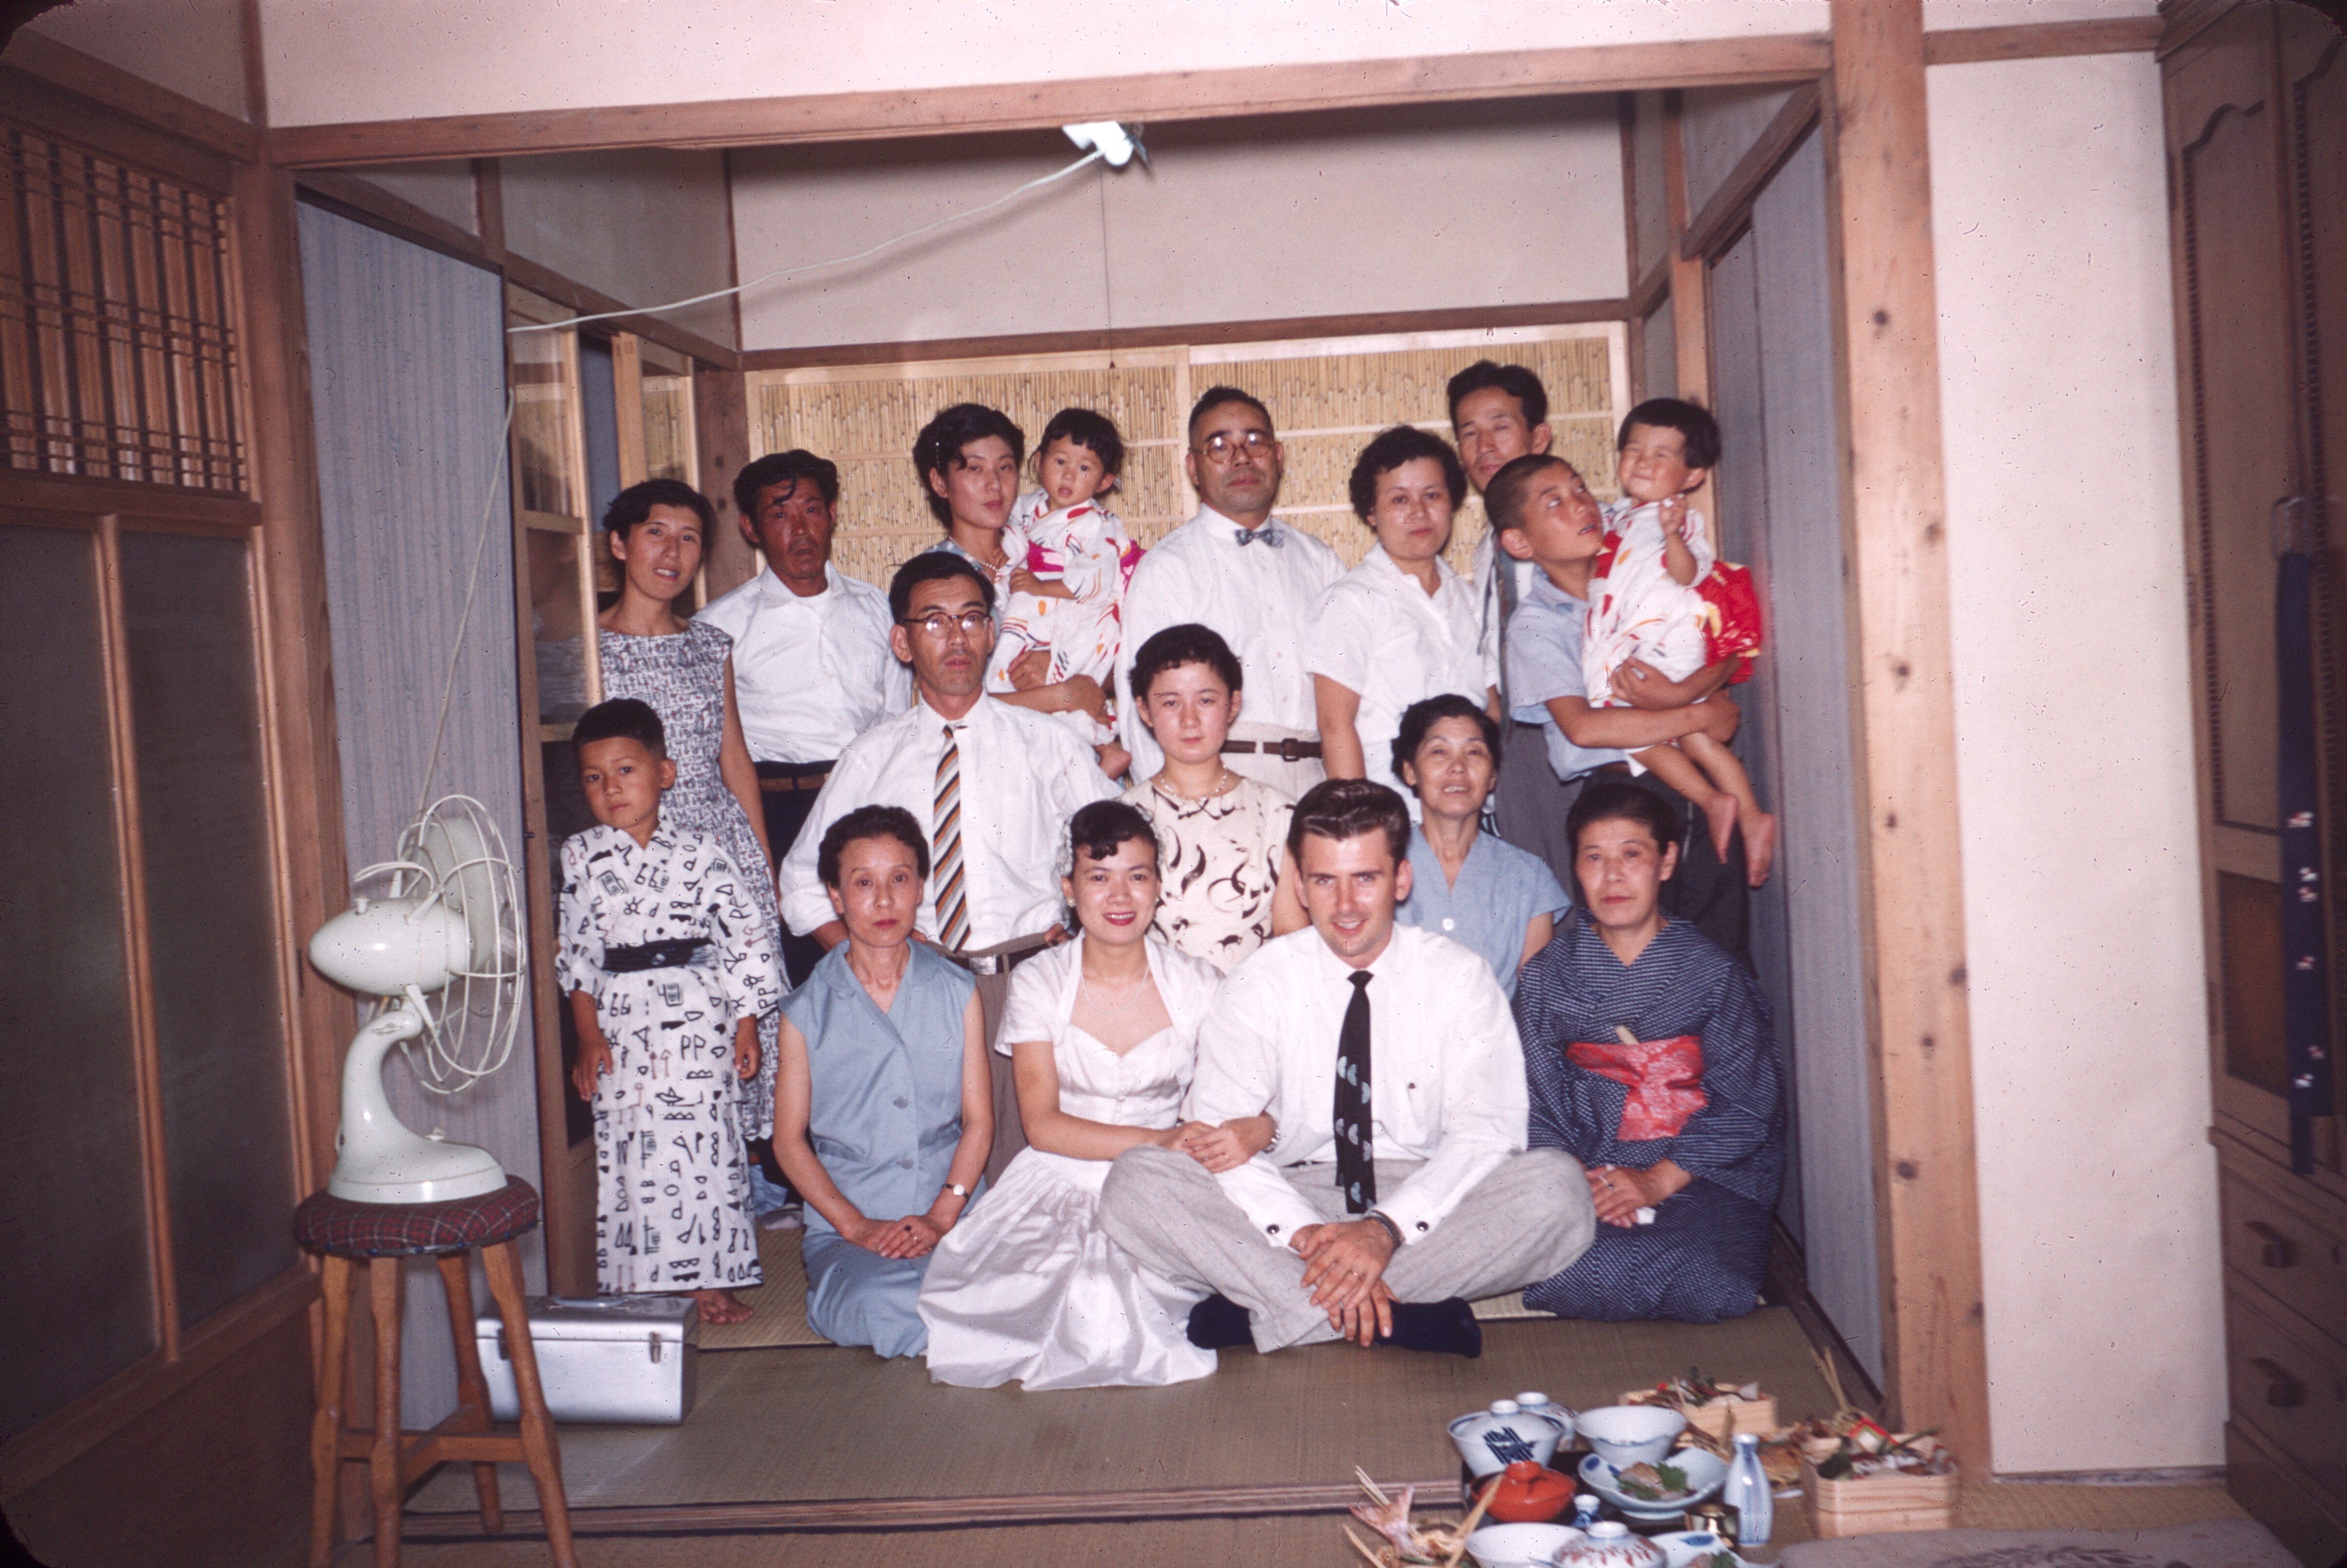 Kazukos Family Portrait, August 1956